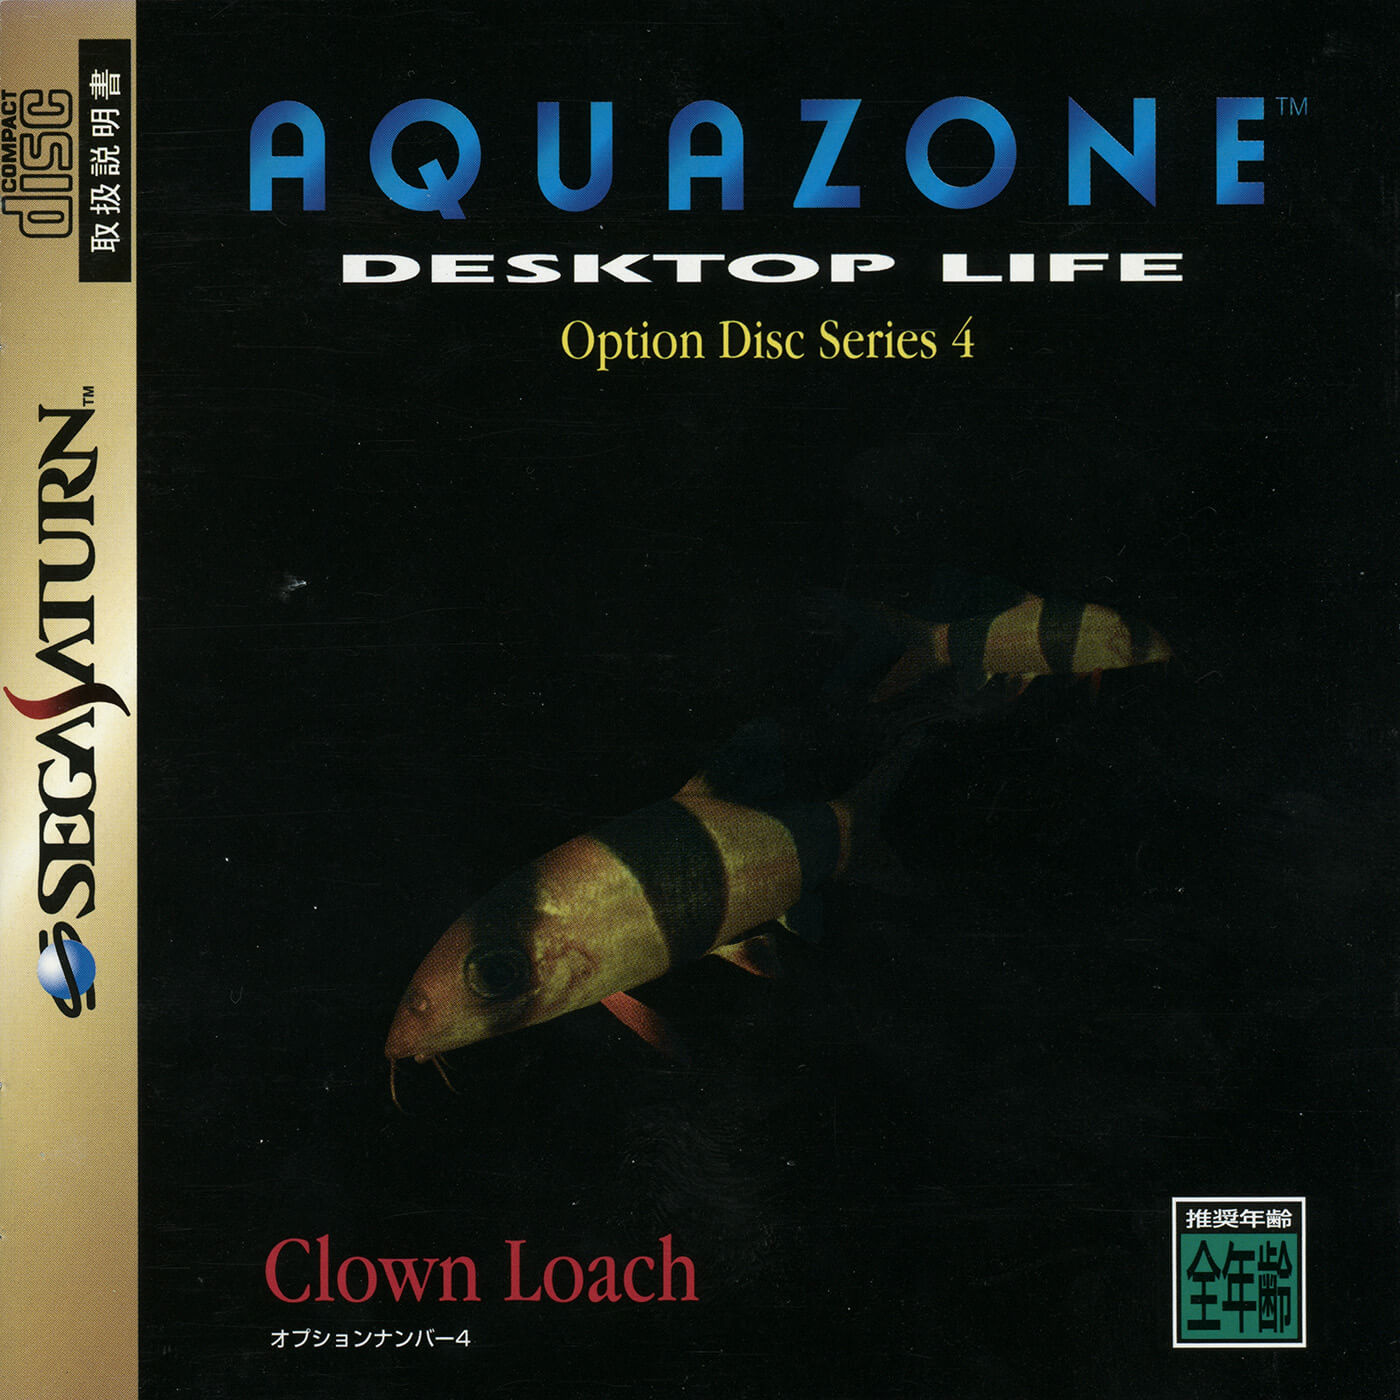 Aquazone: Desktop Life Option Disc Series 4: Clown Loach